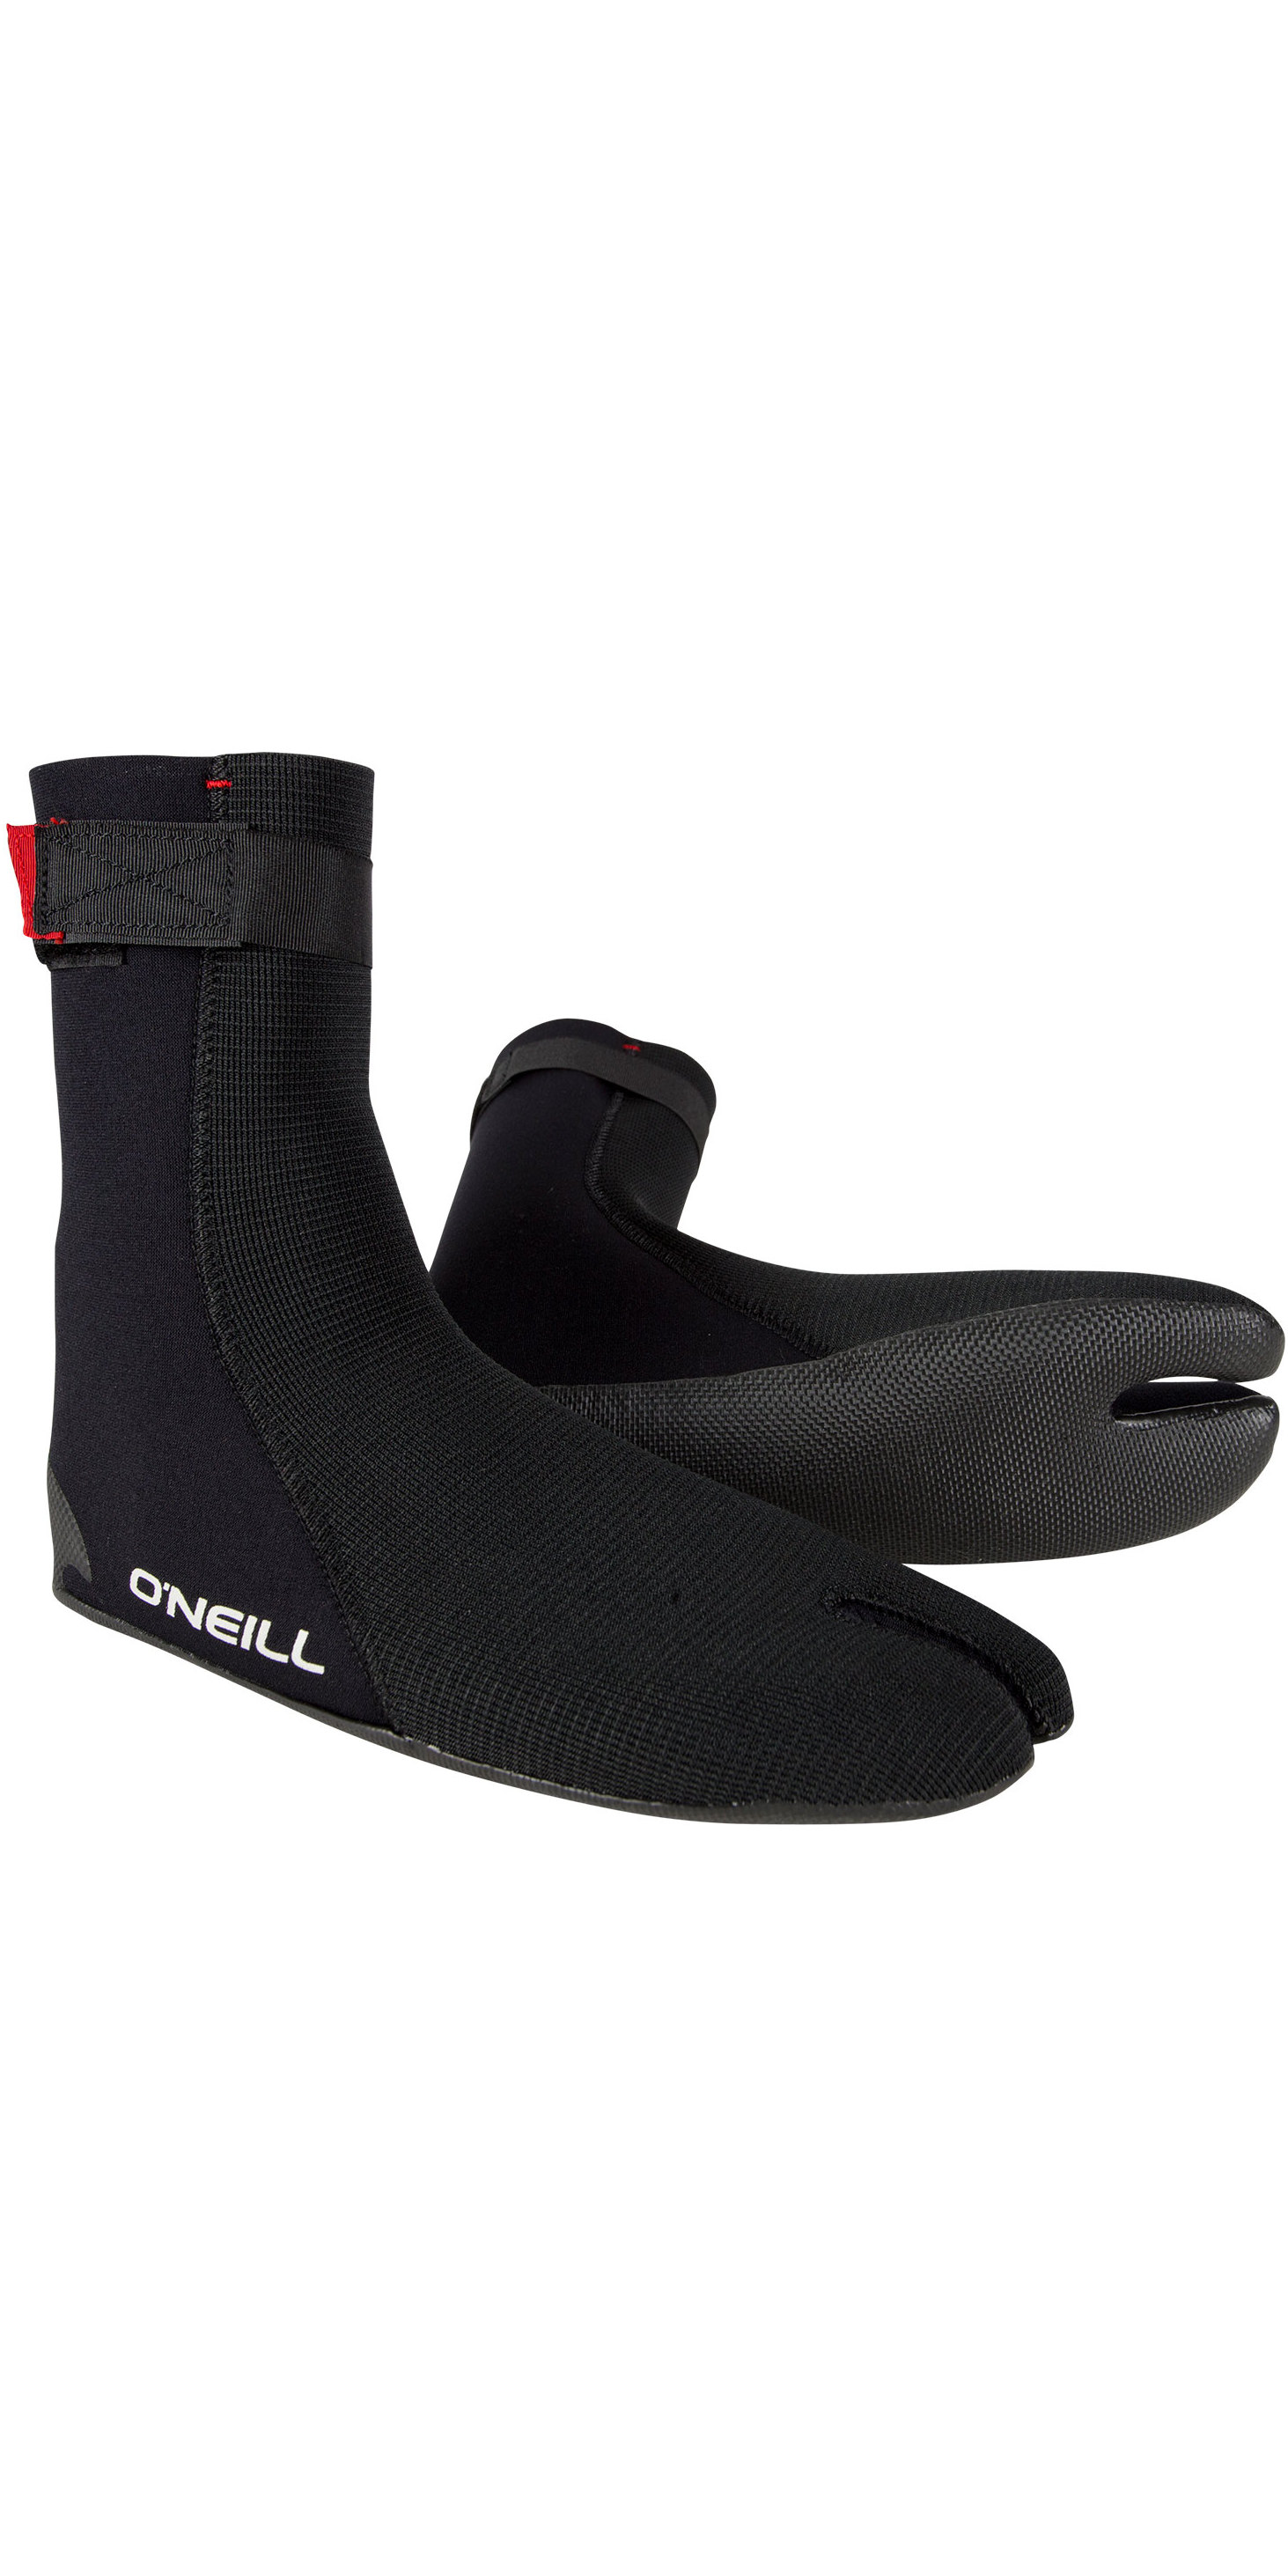 Oneill-Stivali Tropicali Taglia 42 Colore: Nero Uomo 3 mm ONEILL WETSUITS 3mm Dive Boot 